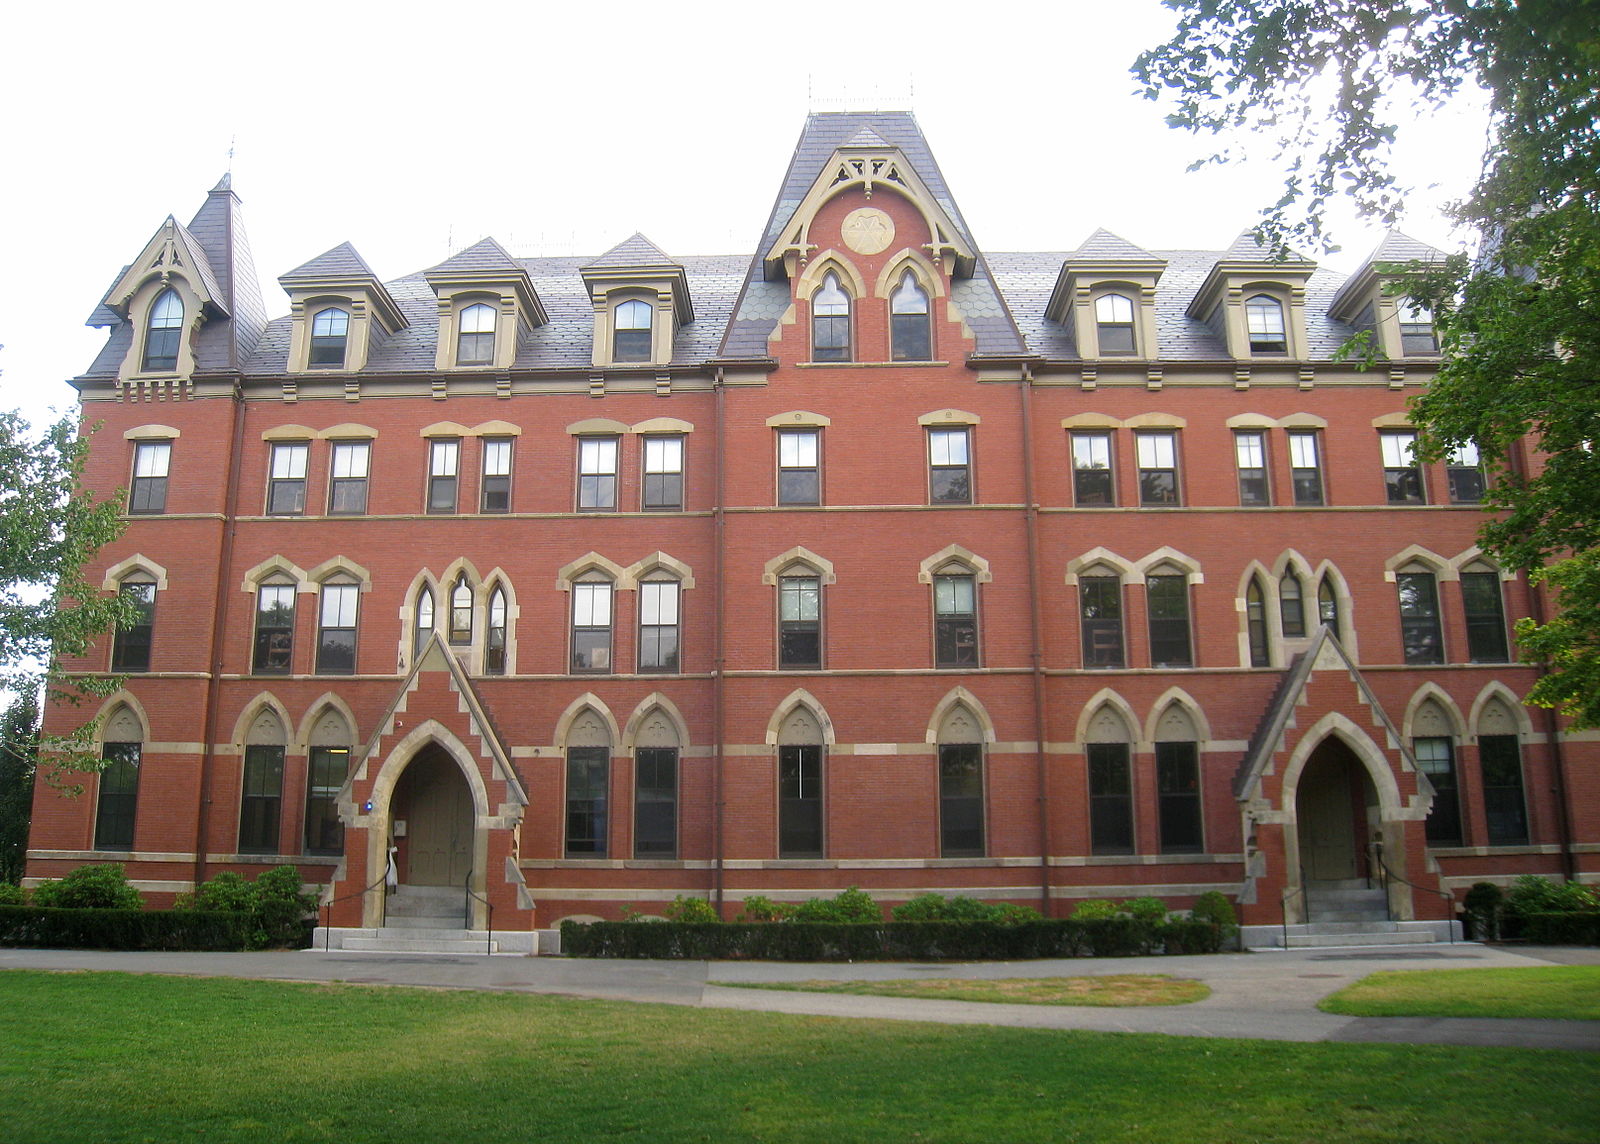 Tufts University, West Hall